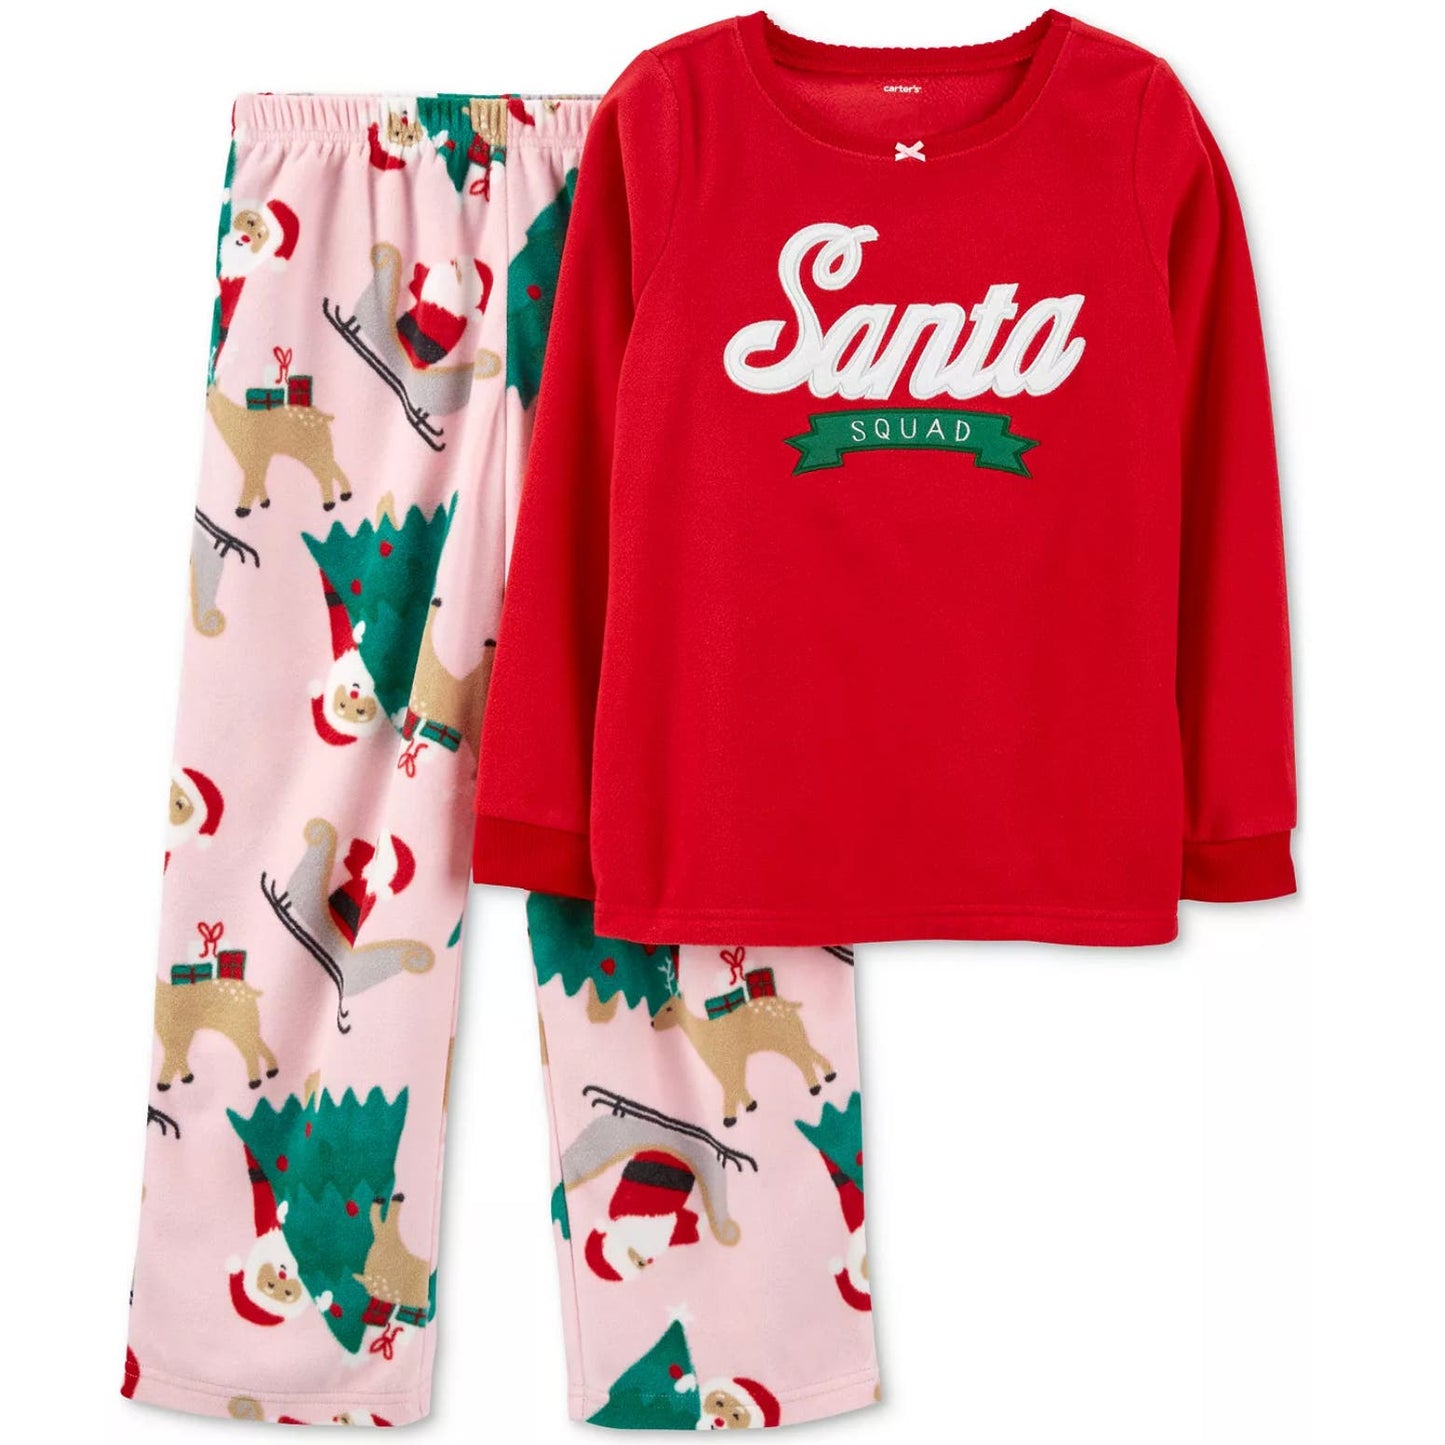 Carters Santa Squad Fleece Pajamas 2 Piece Set